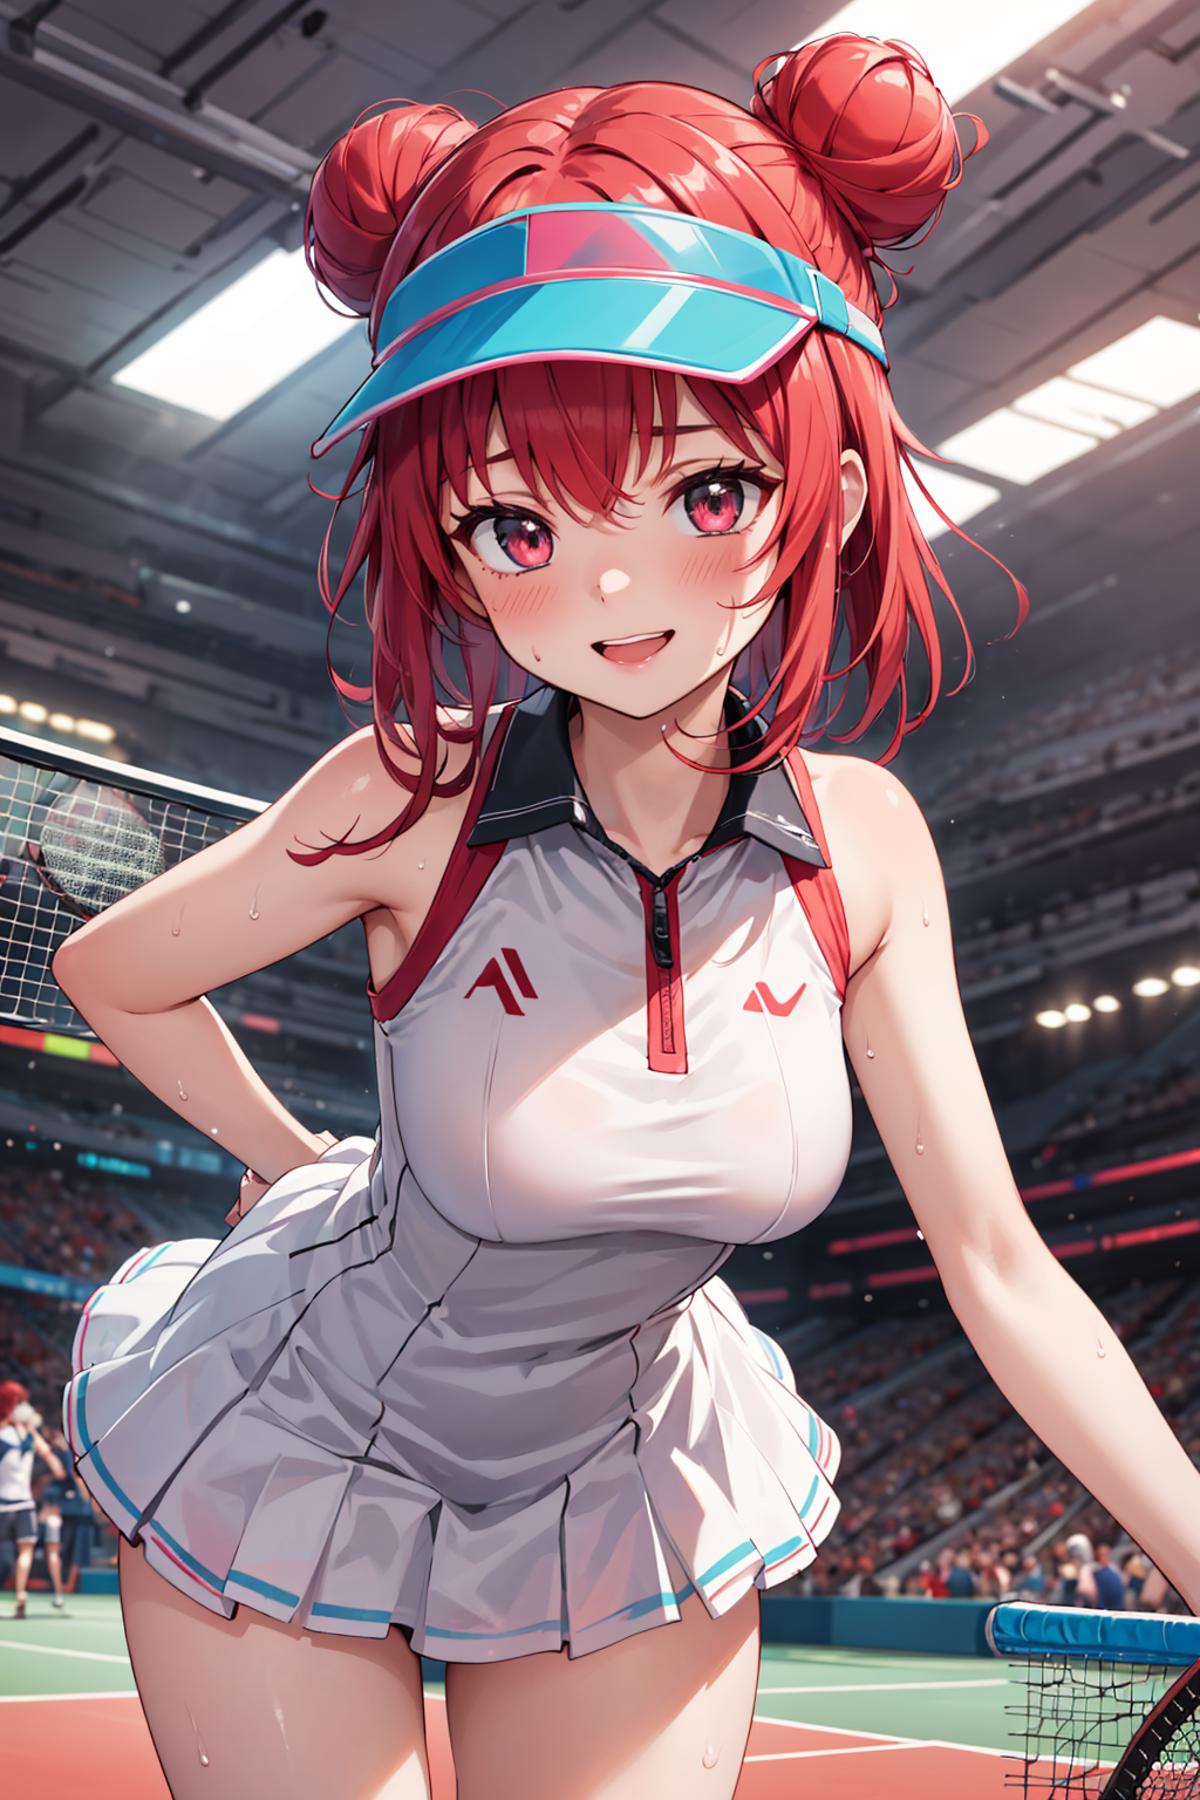 Tennis Dress image by Tokugawa